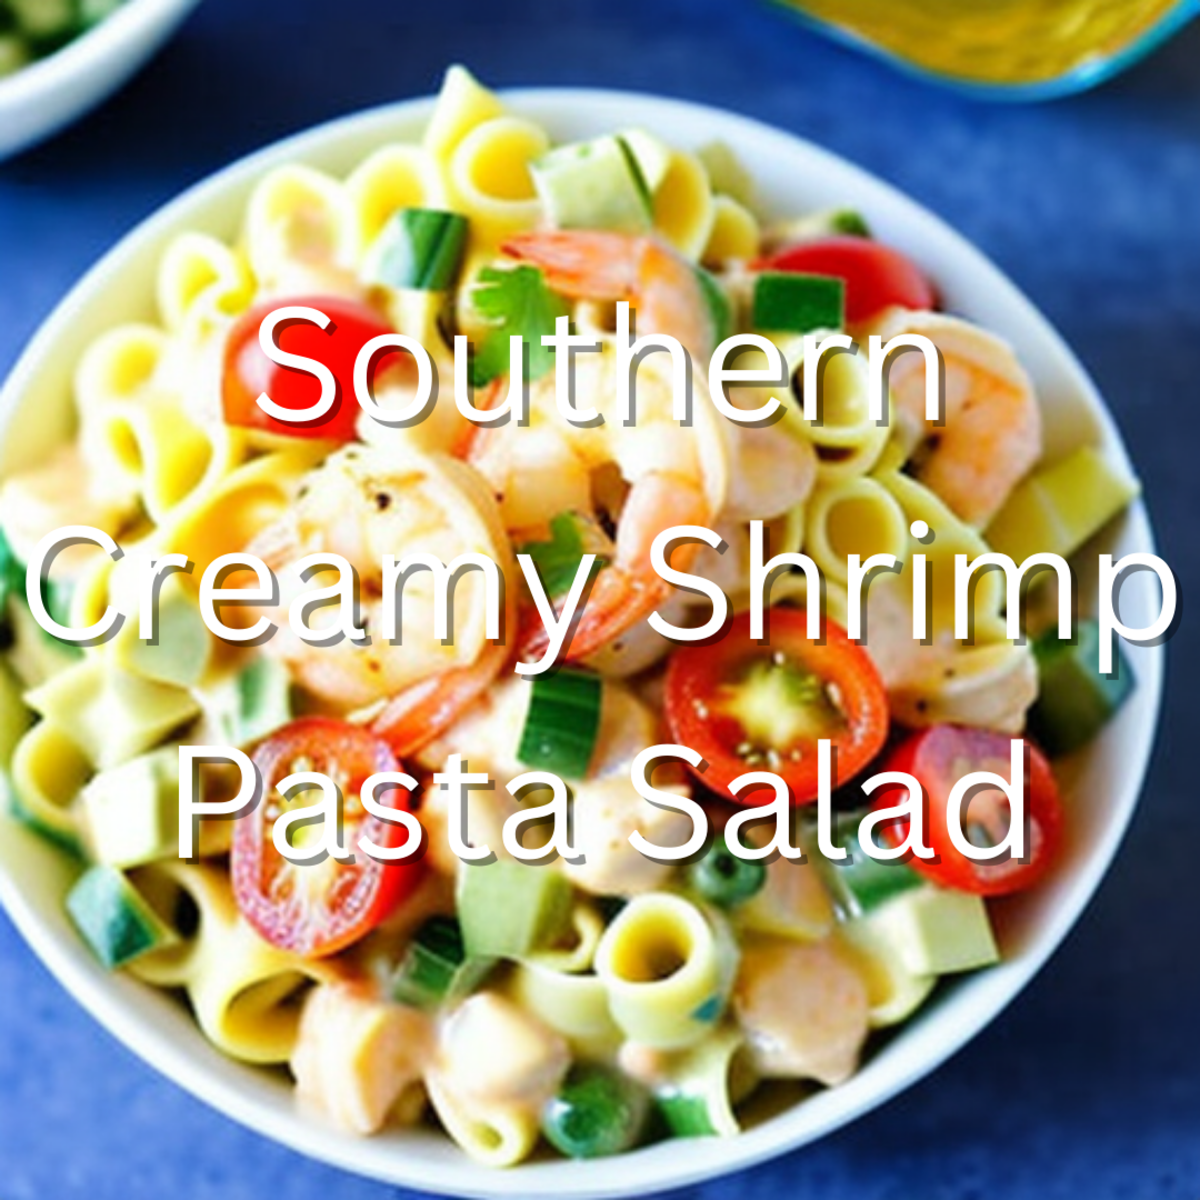 Southern Creamy Shrimp Pasta Salad.